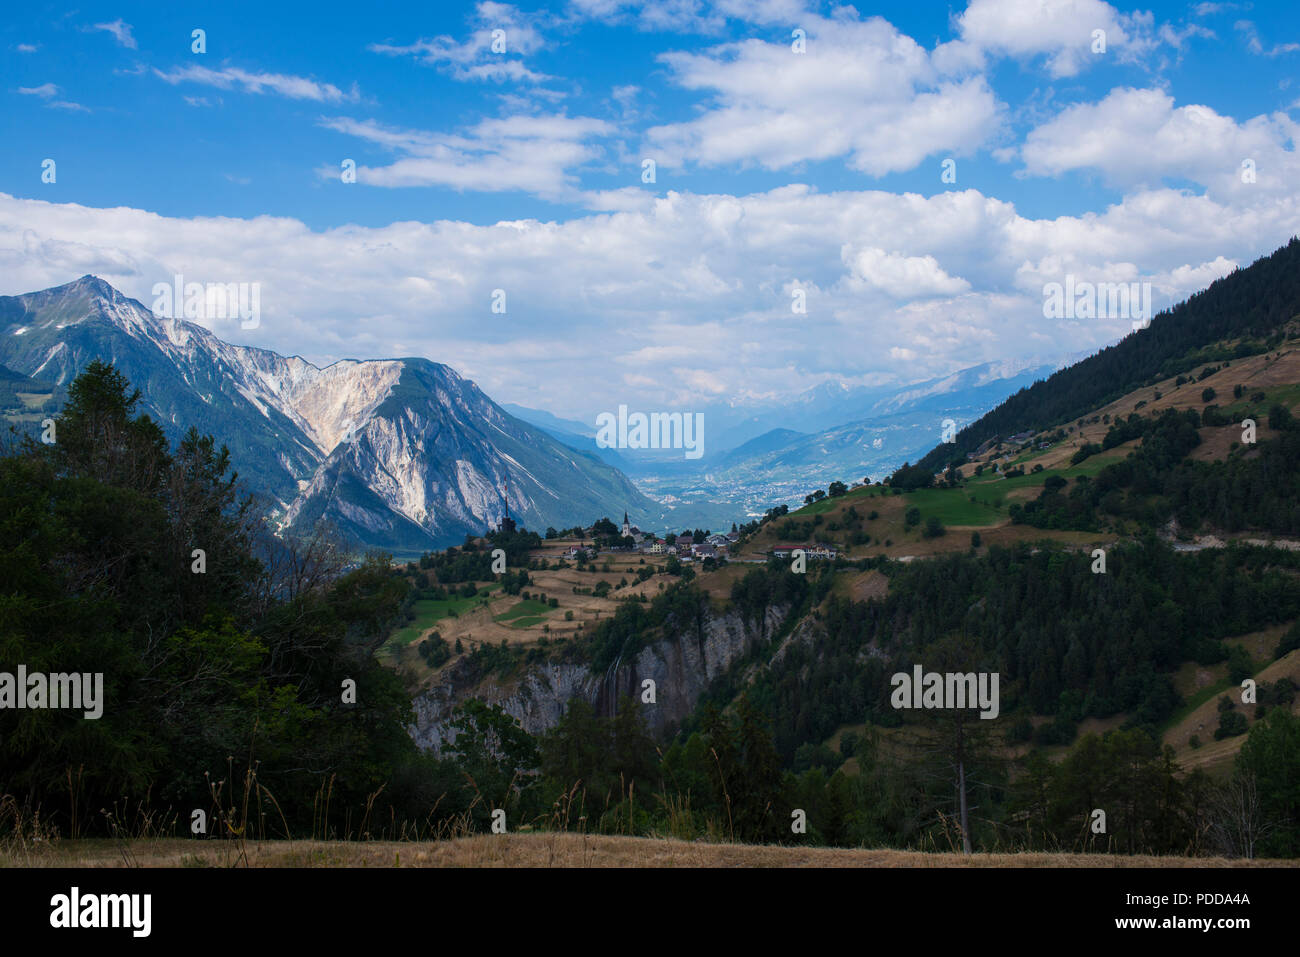 Swiss Alps surrounding a Switzerland town Stock Photo